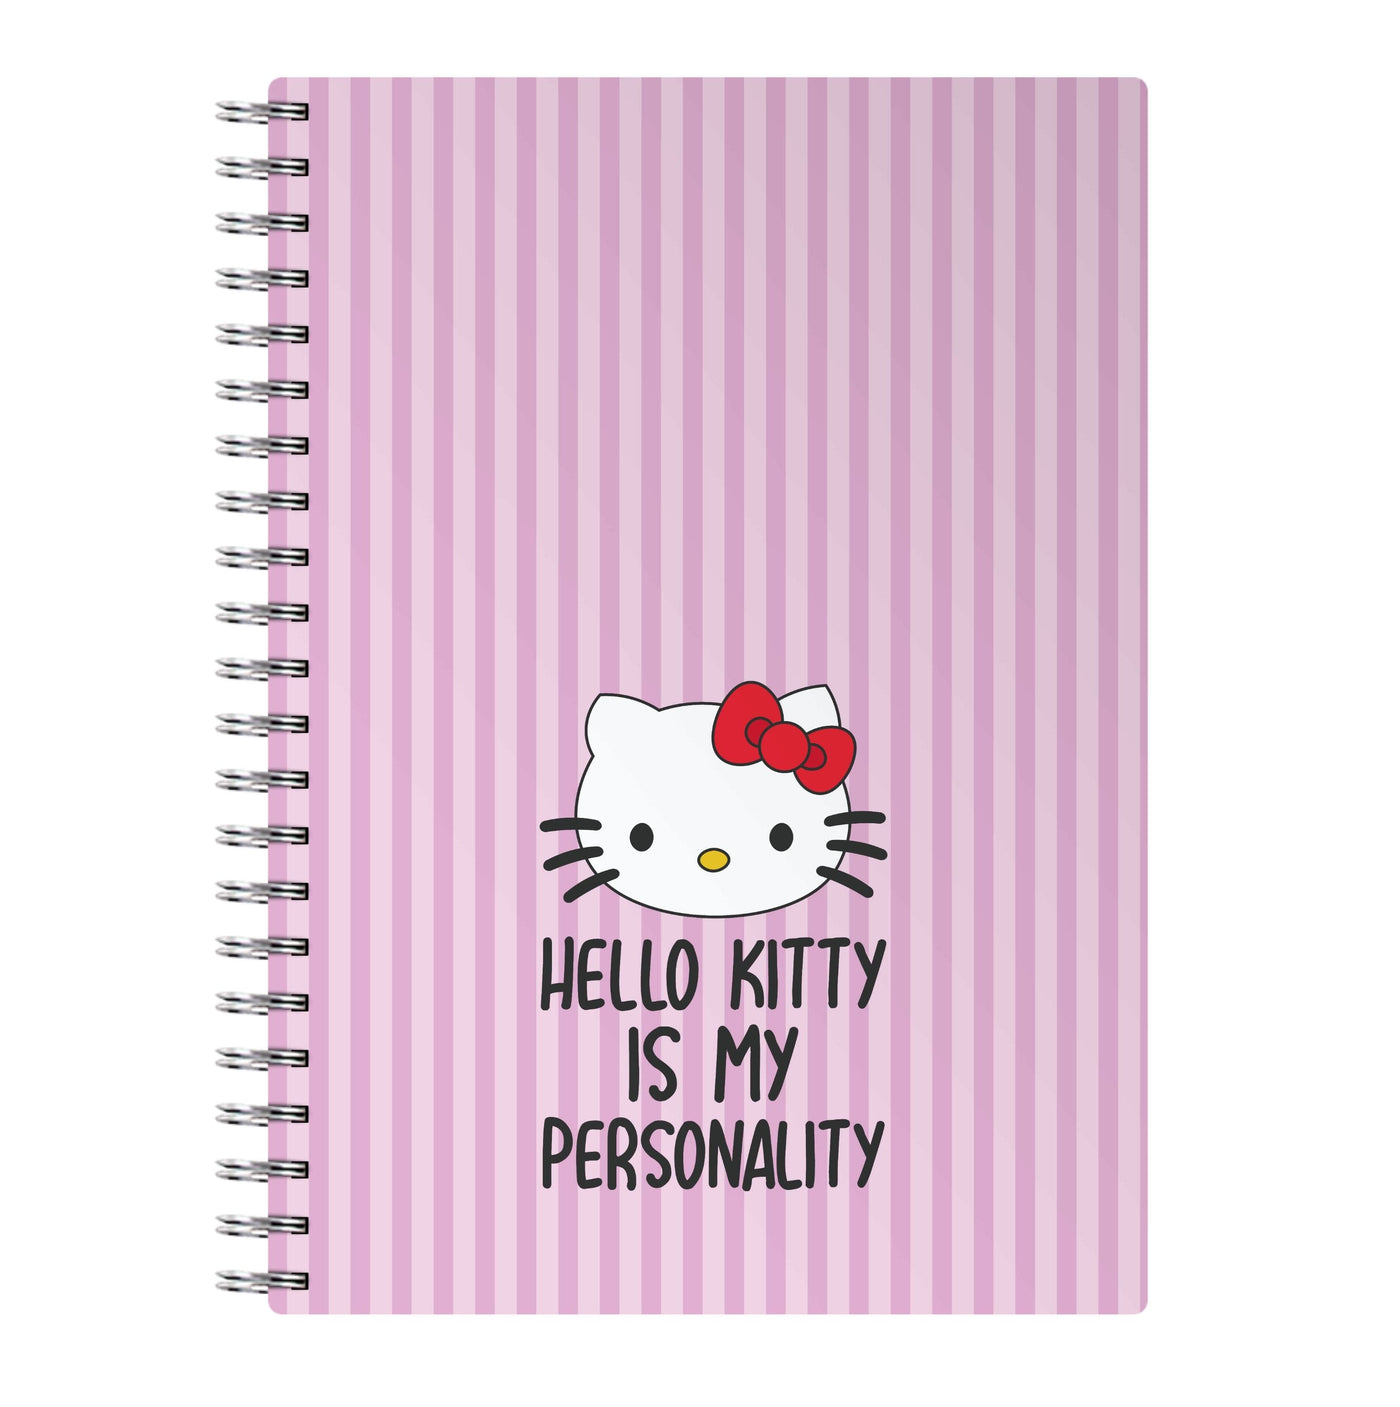 Hello Kitty Is My Personality - Hello Kitty Notebook